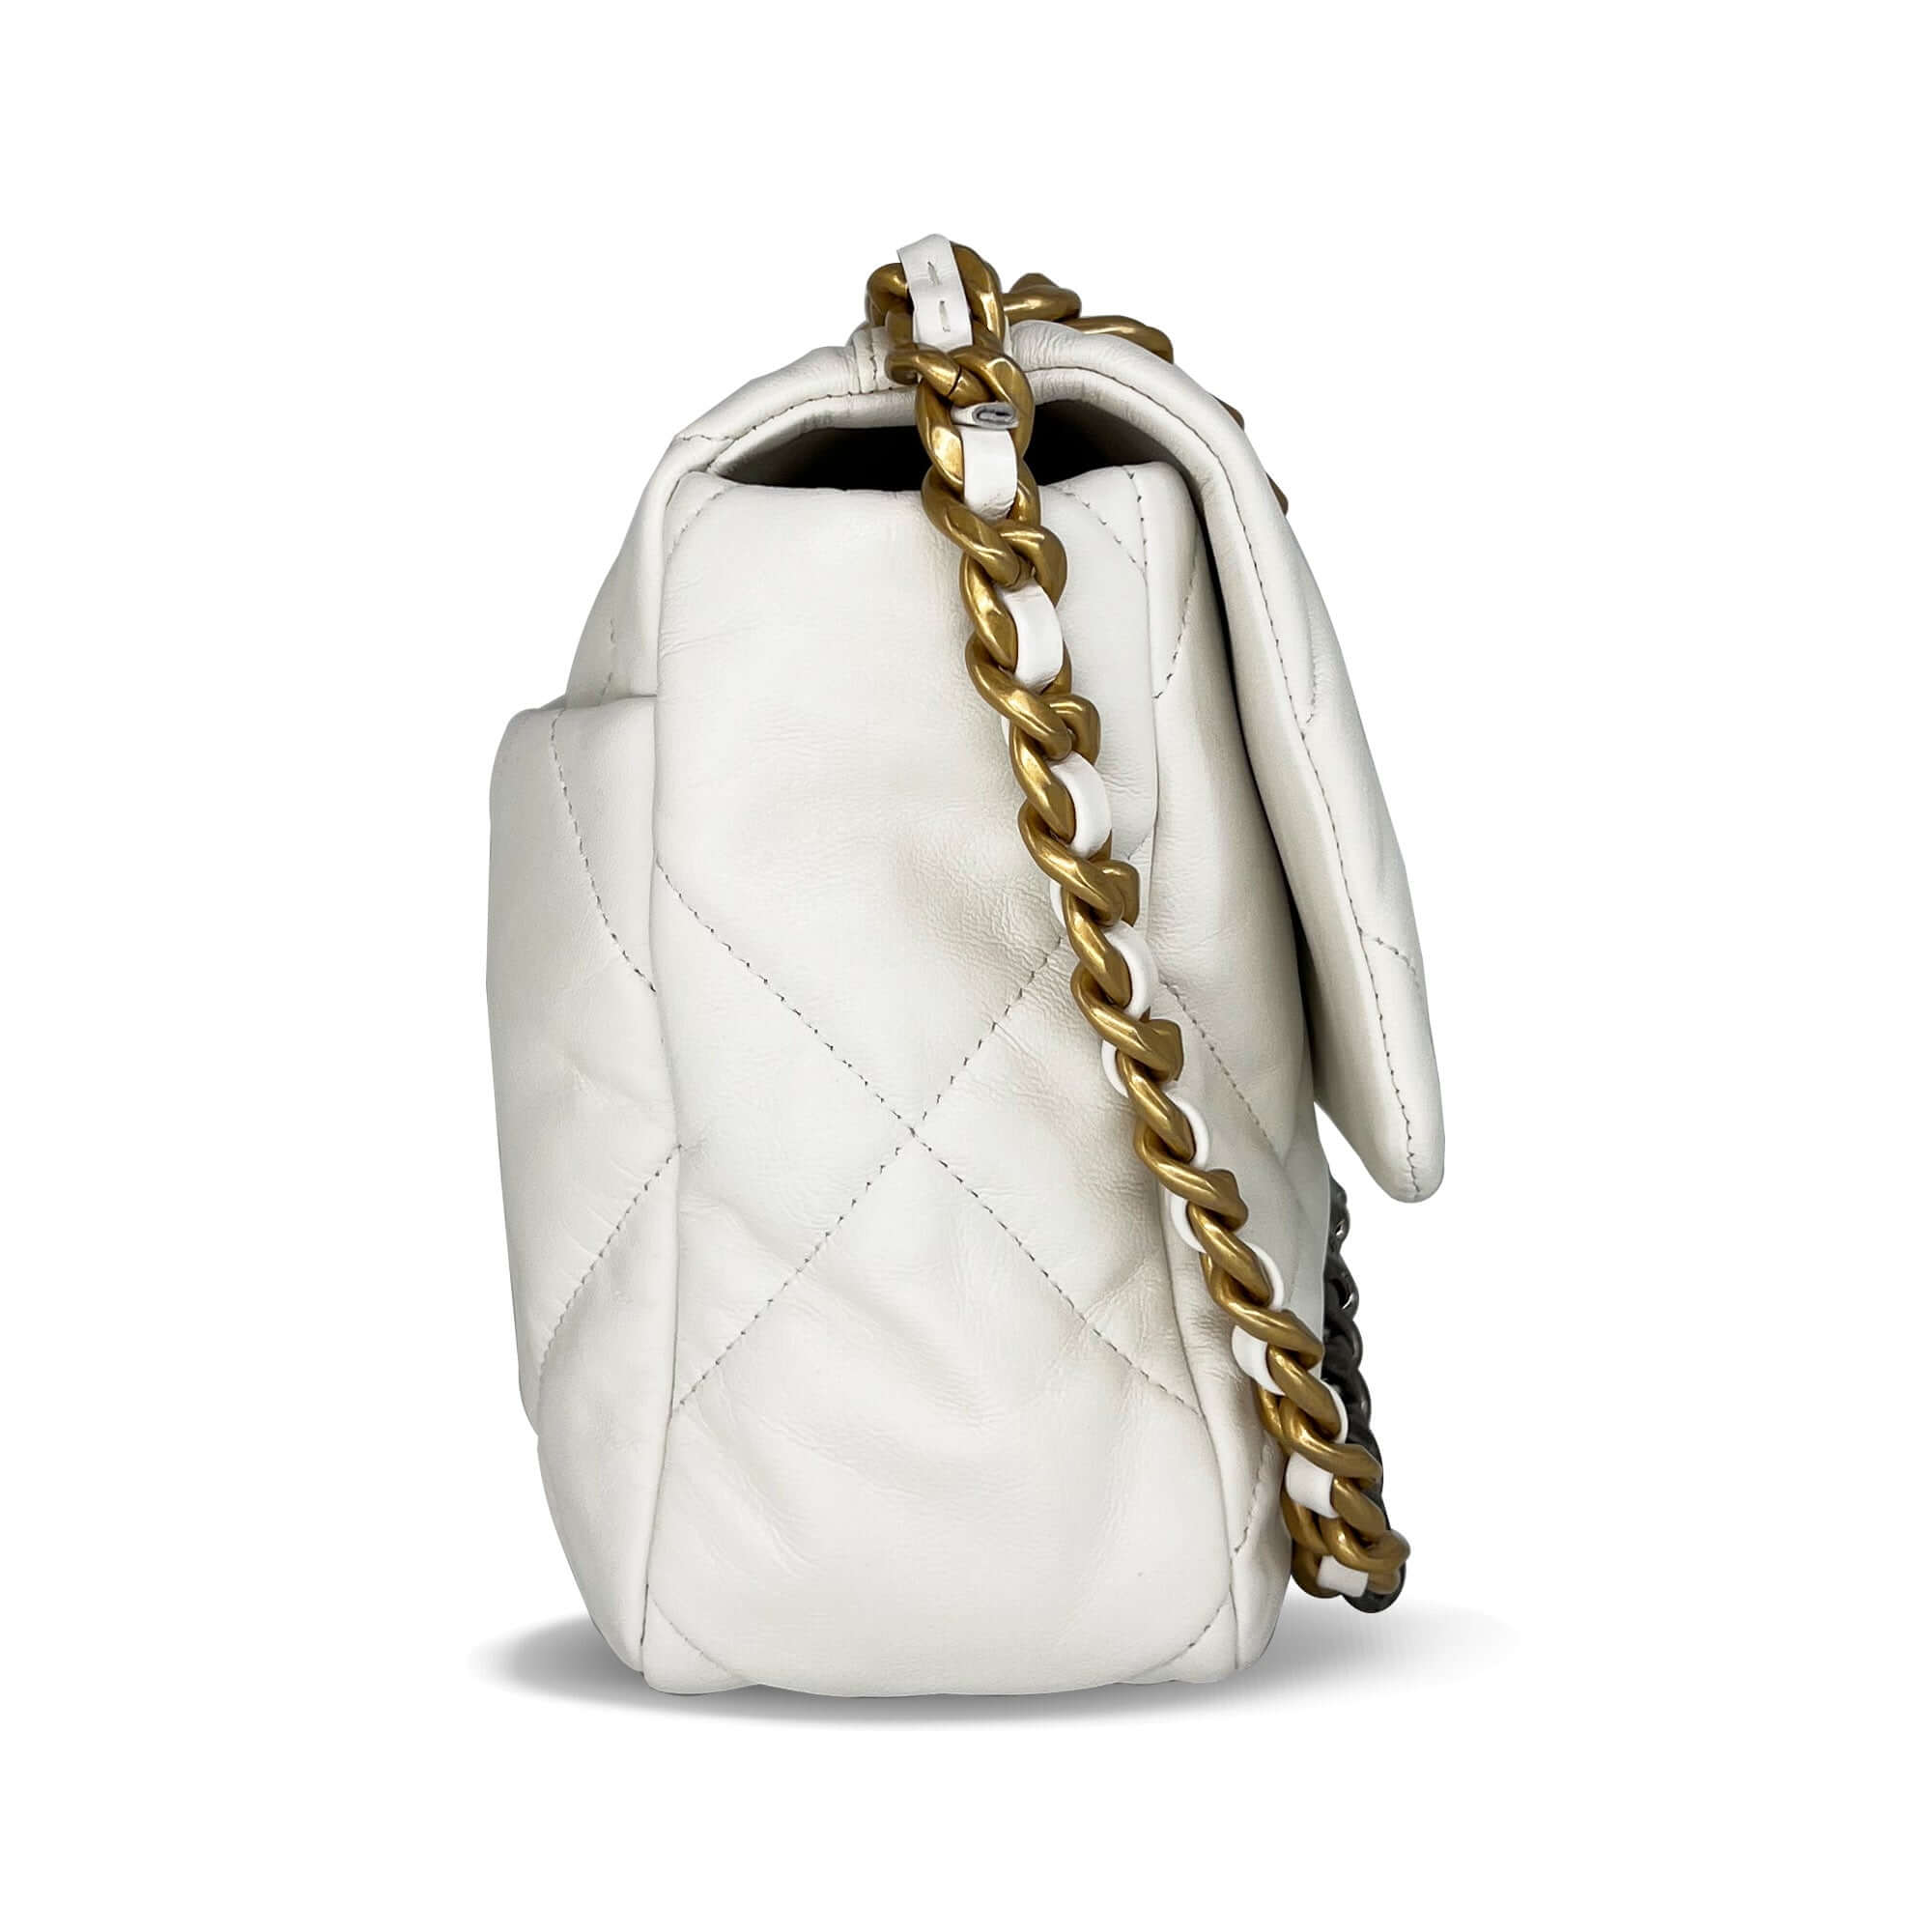 Chanel 19 flap bag